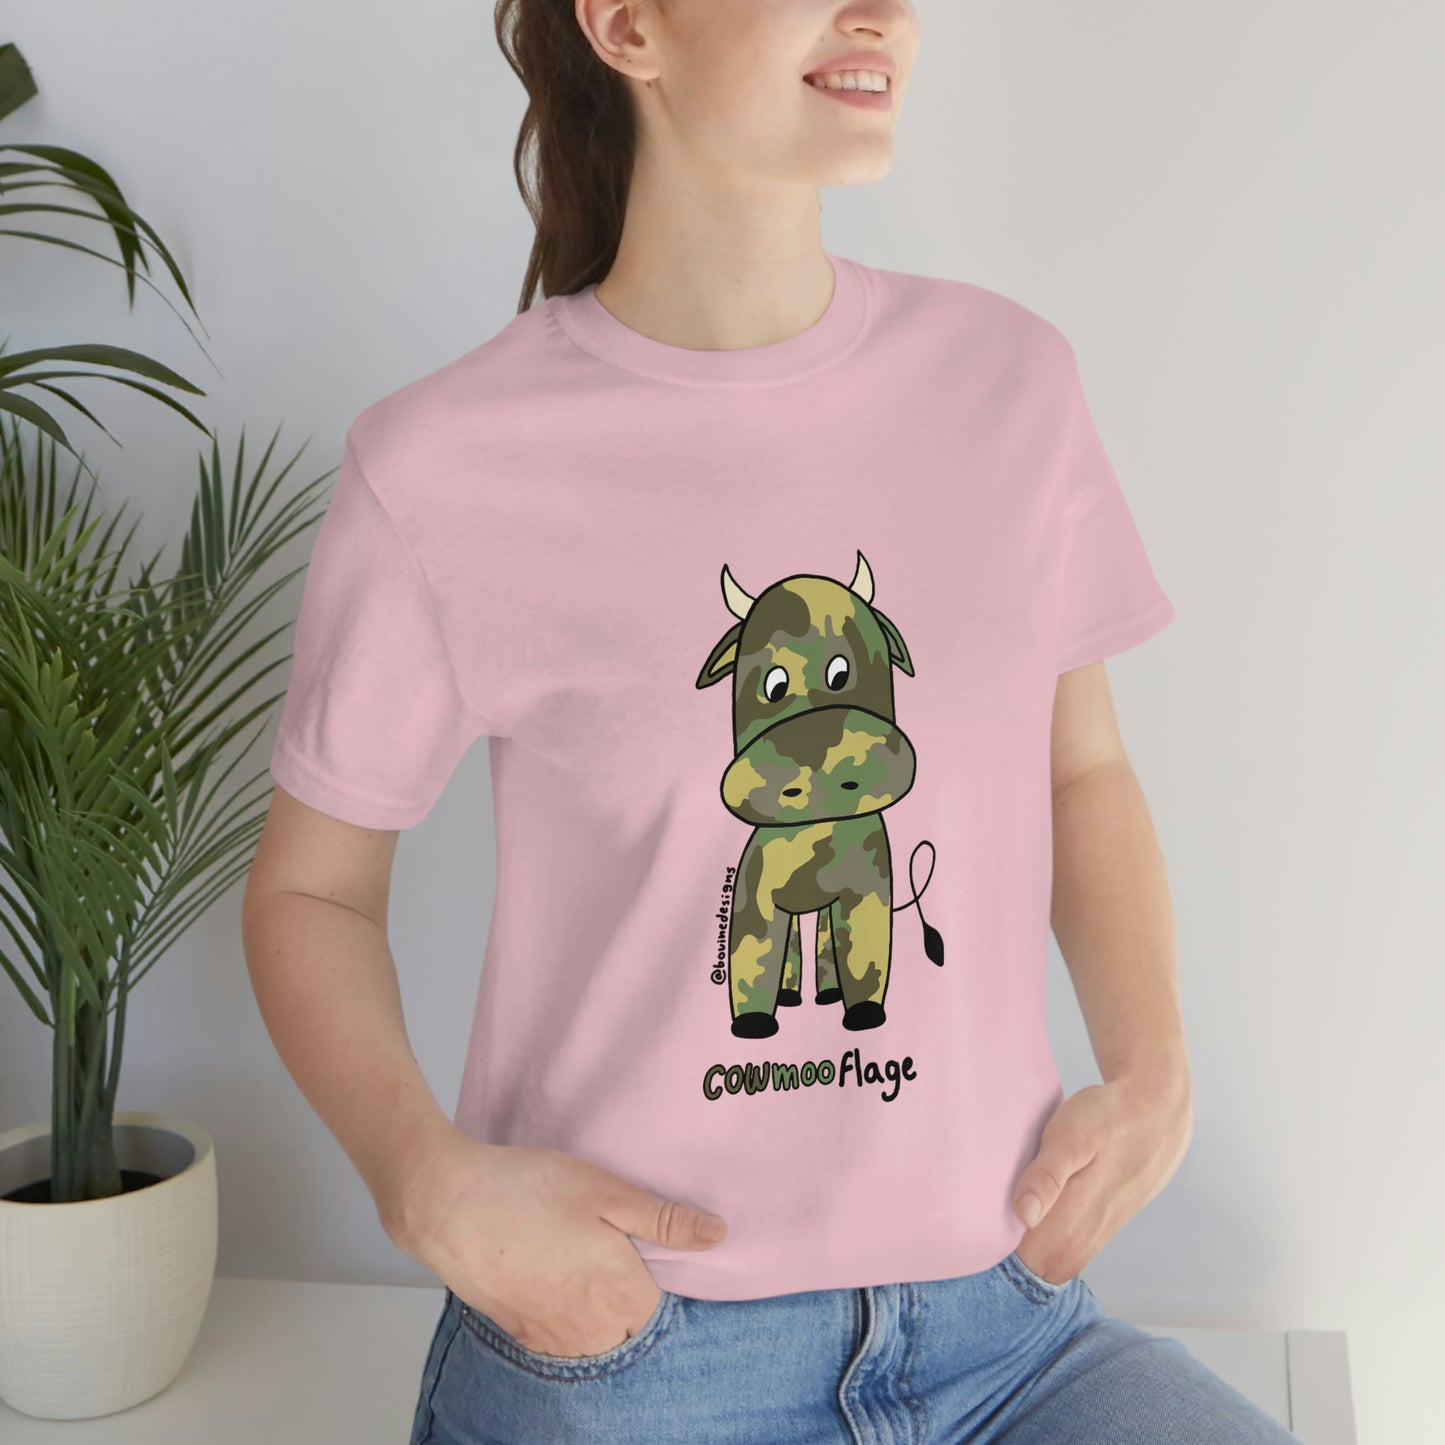 Cowmooflage T-Shirt